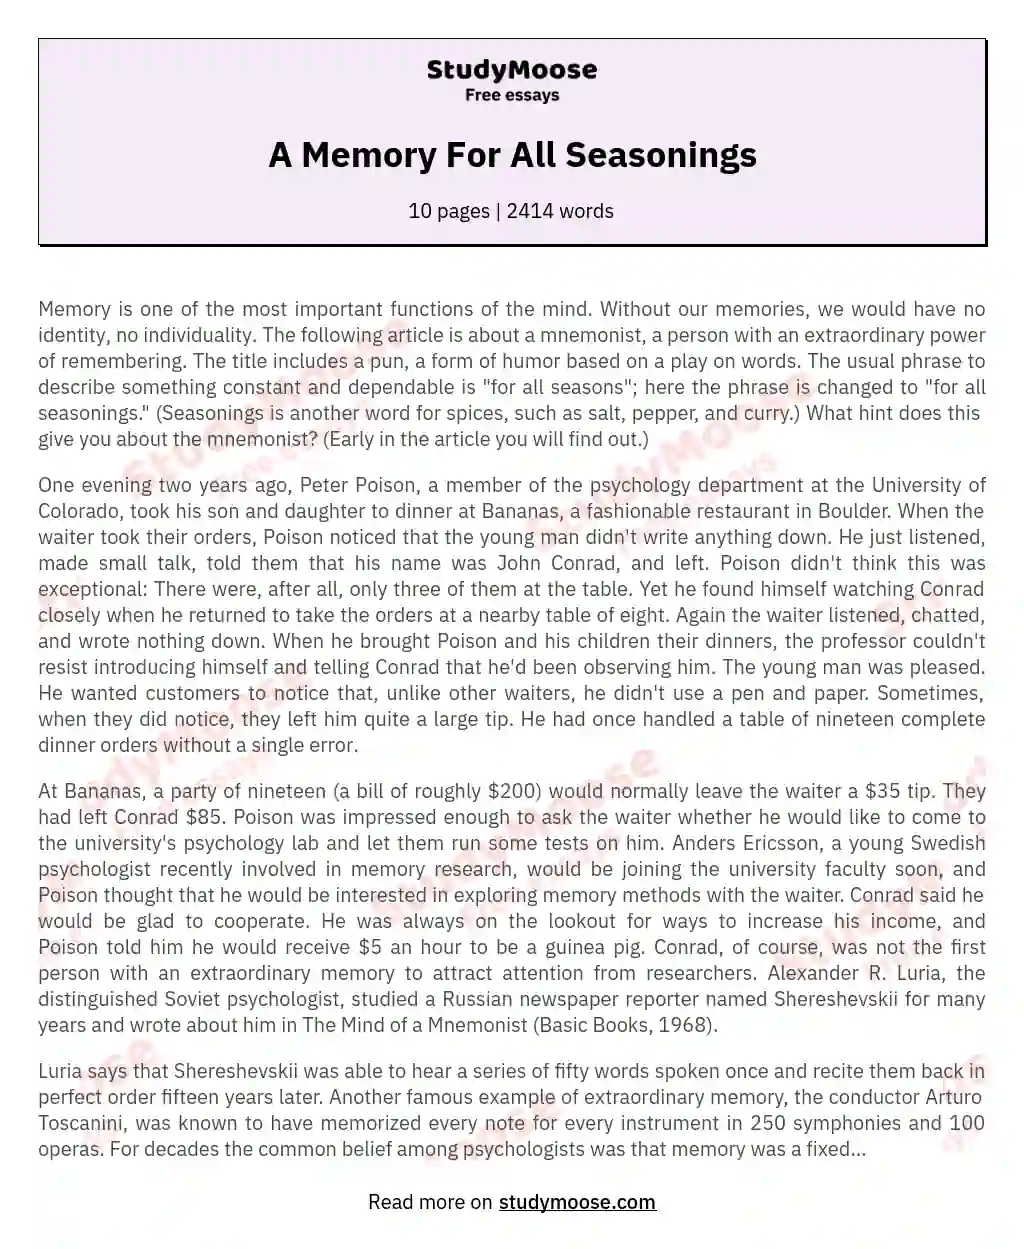 A Memory For All Seasonings essay